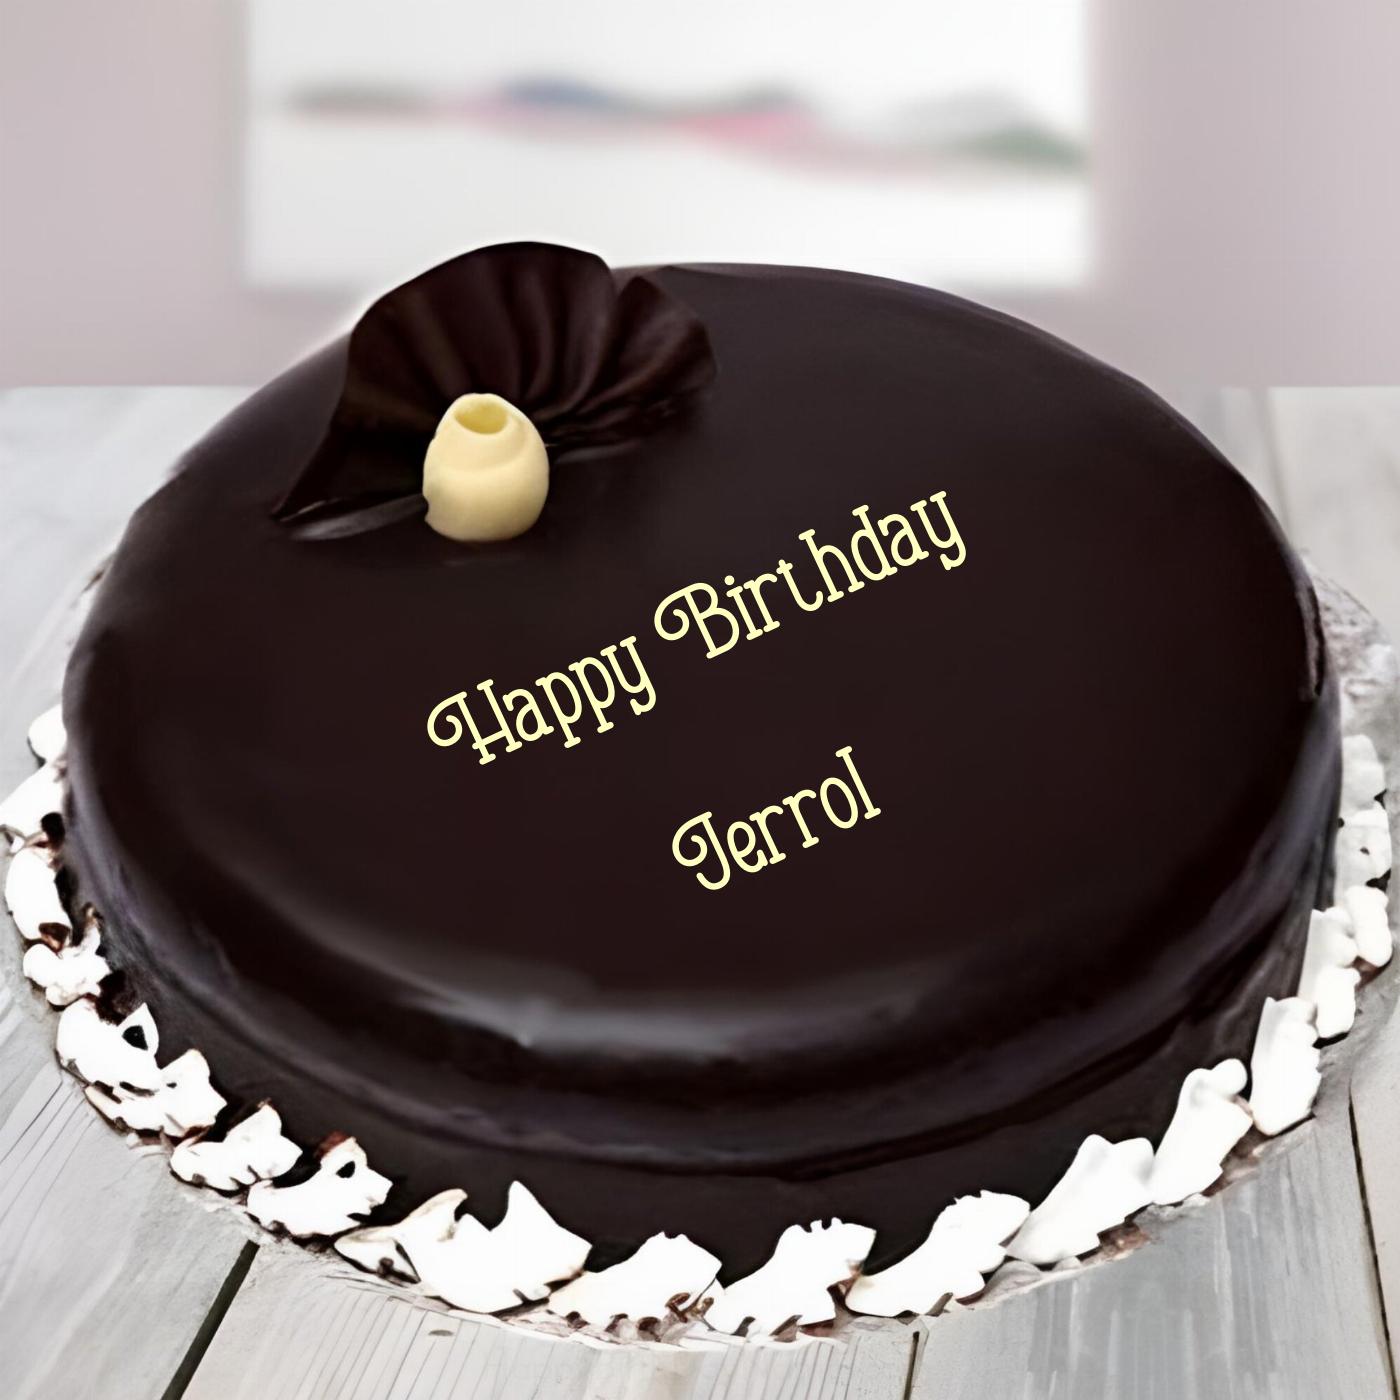 Happy Birthday Jerrol Beautiful Chocolate Cake